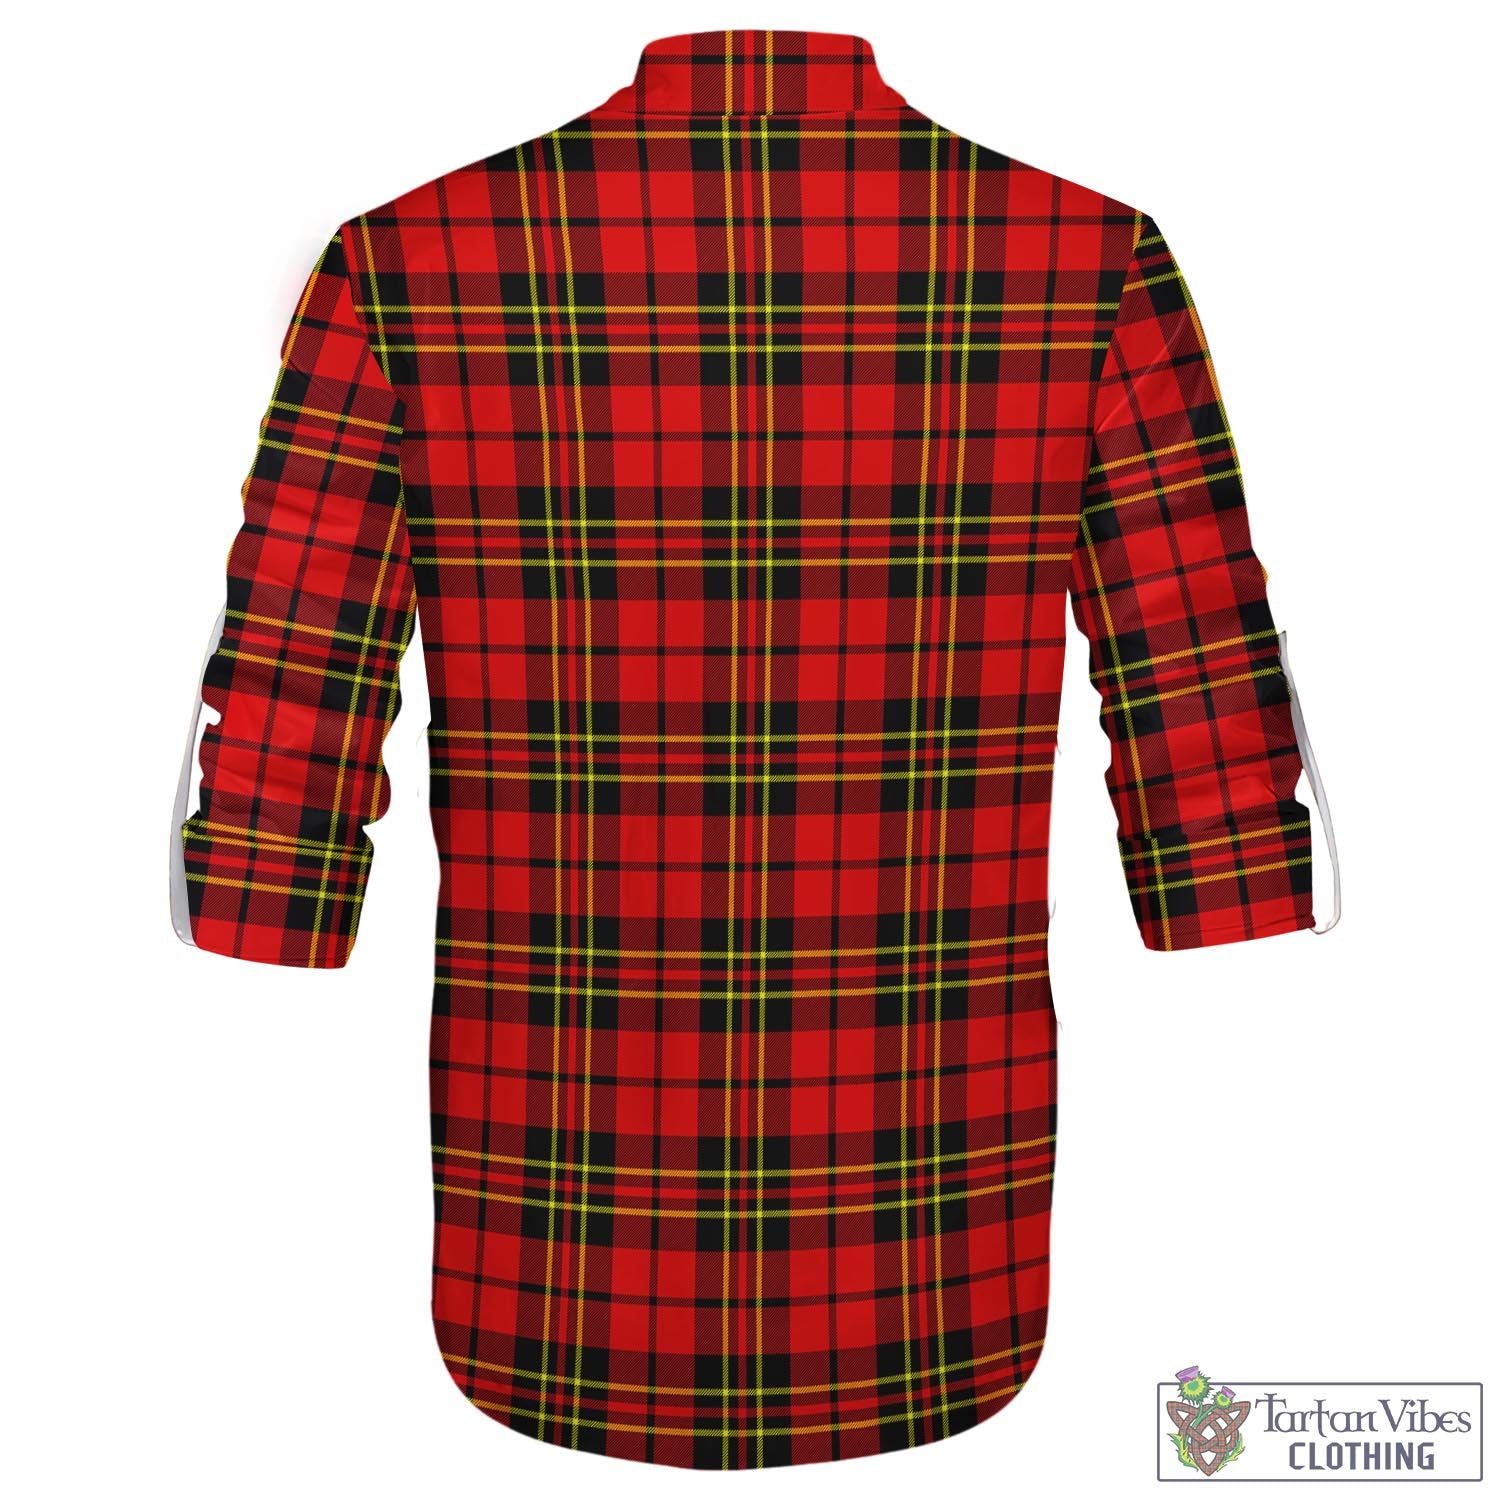 Tartan Vibes Clothing Brodie Modern Tartan Men's Scottish Traditional Jacobite Ghillie Kilt Shirt